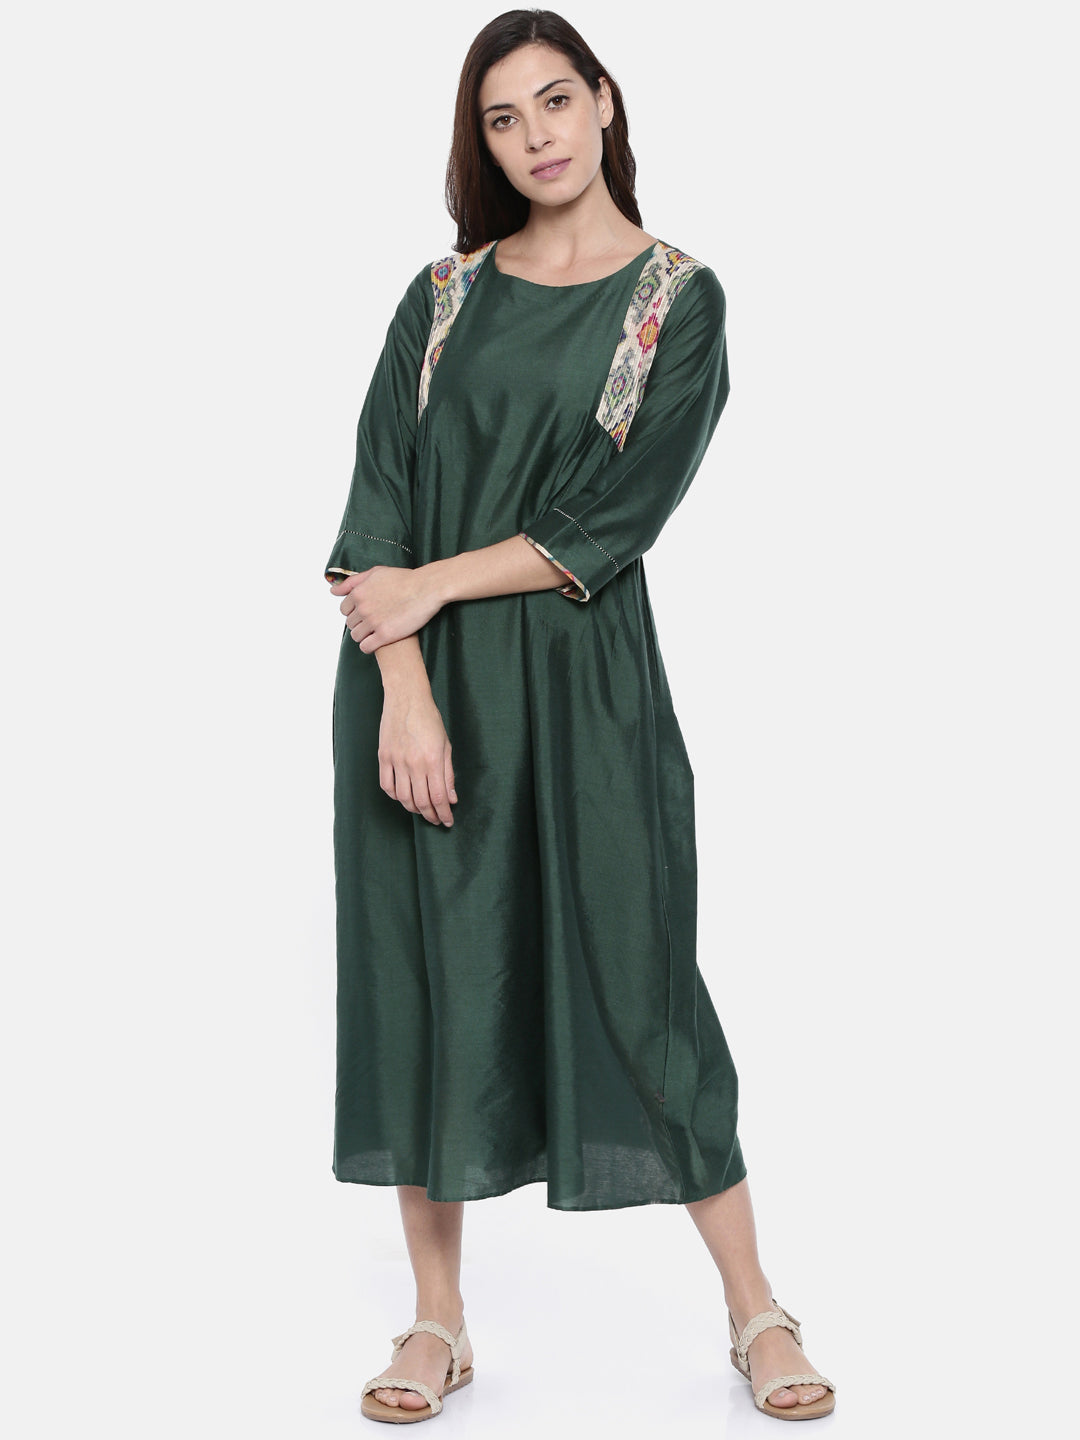 Green Cotton Chanderi Dress  - AS0197 - Asmi Shop